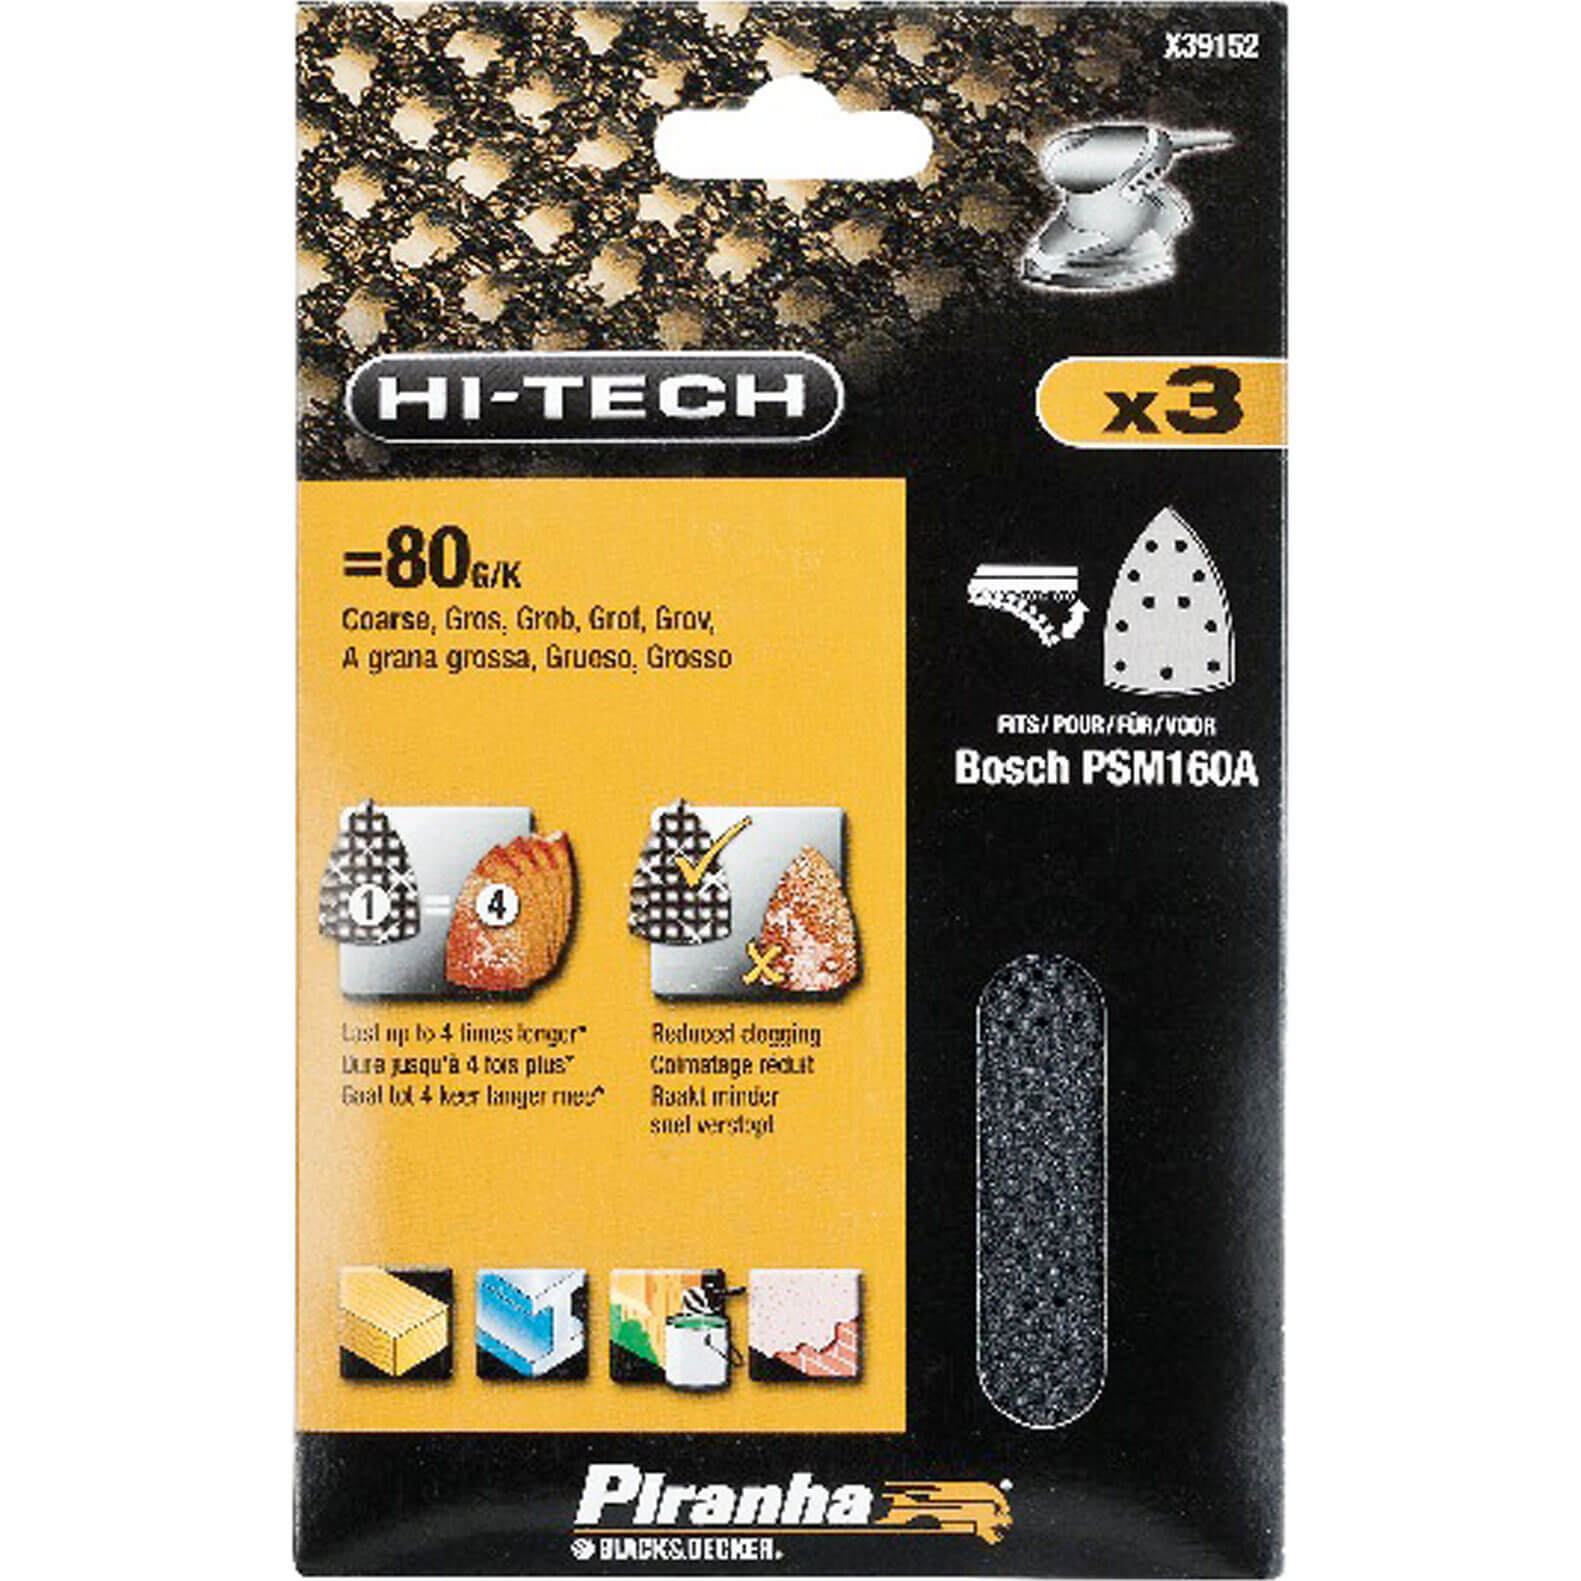 Black and Decker Piranha Hi Tech Quick Fit Multi Sander Delta Sanding Sheets 80g Pack of 3